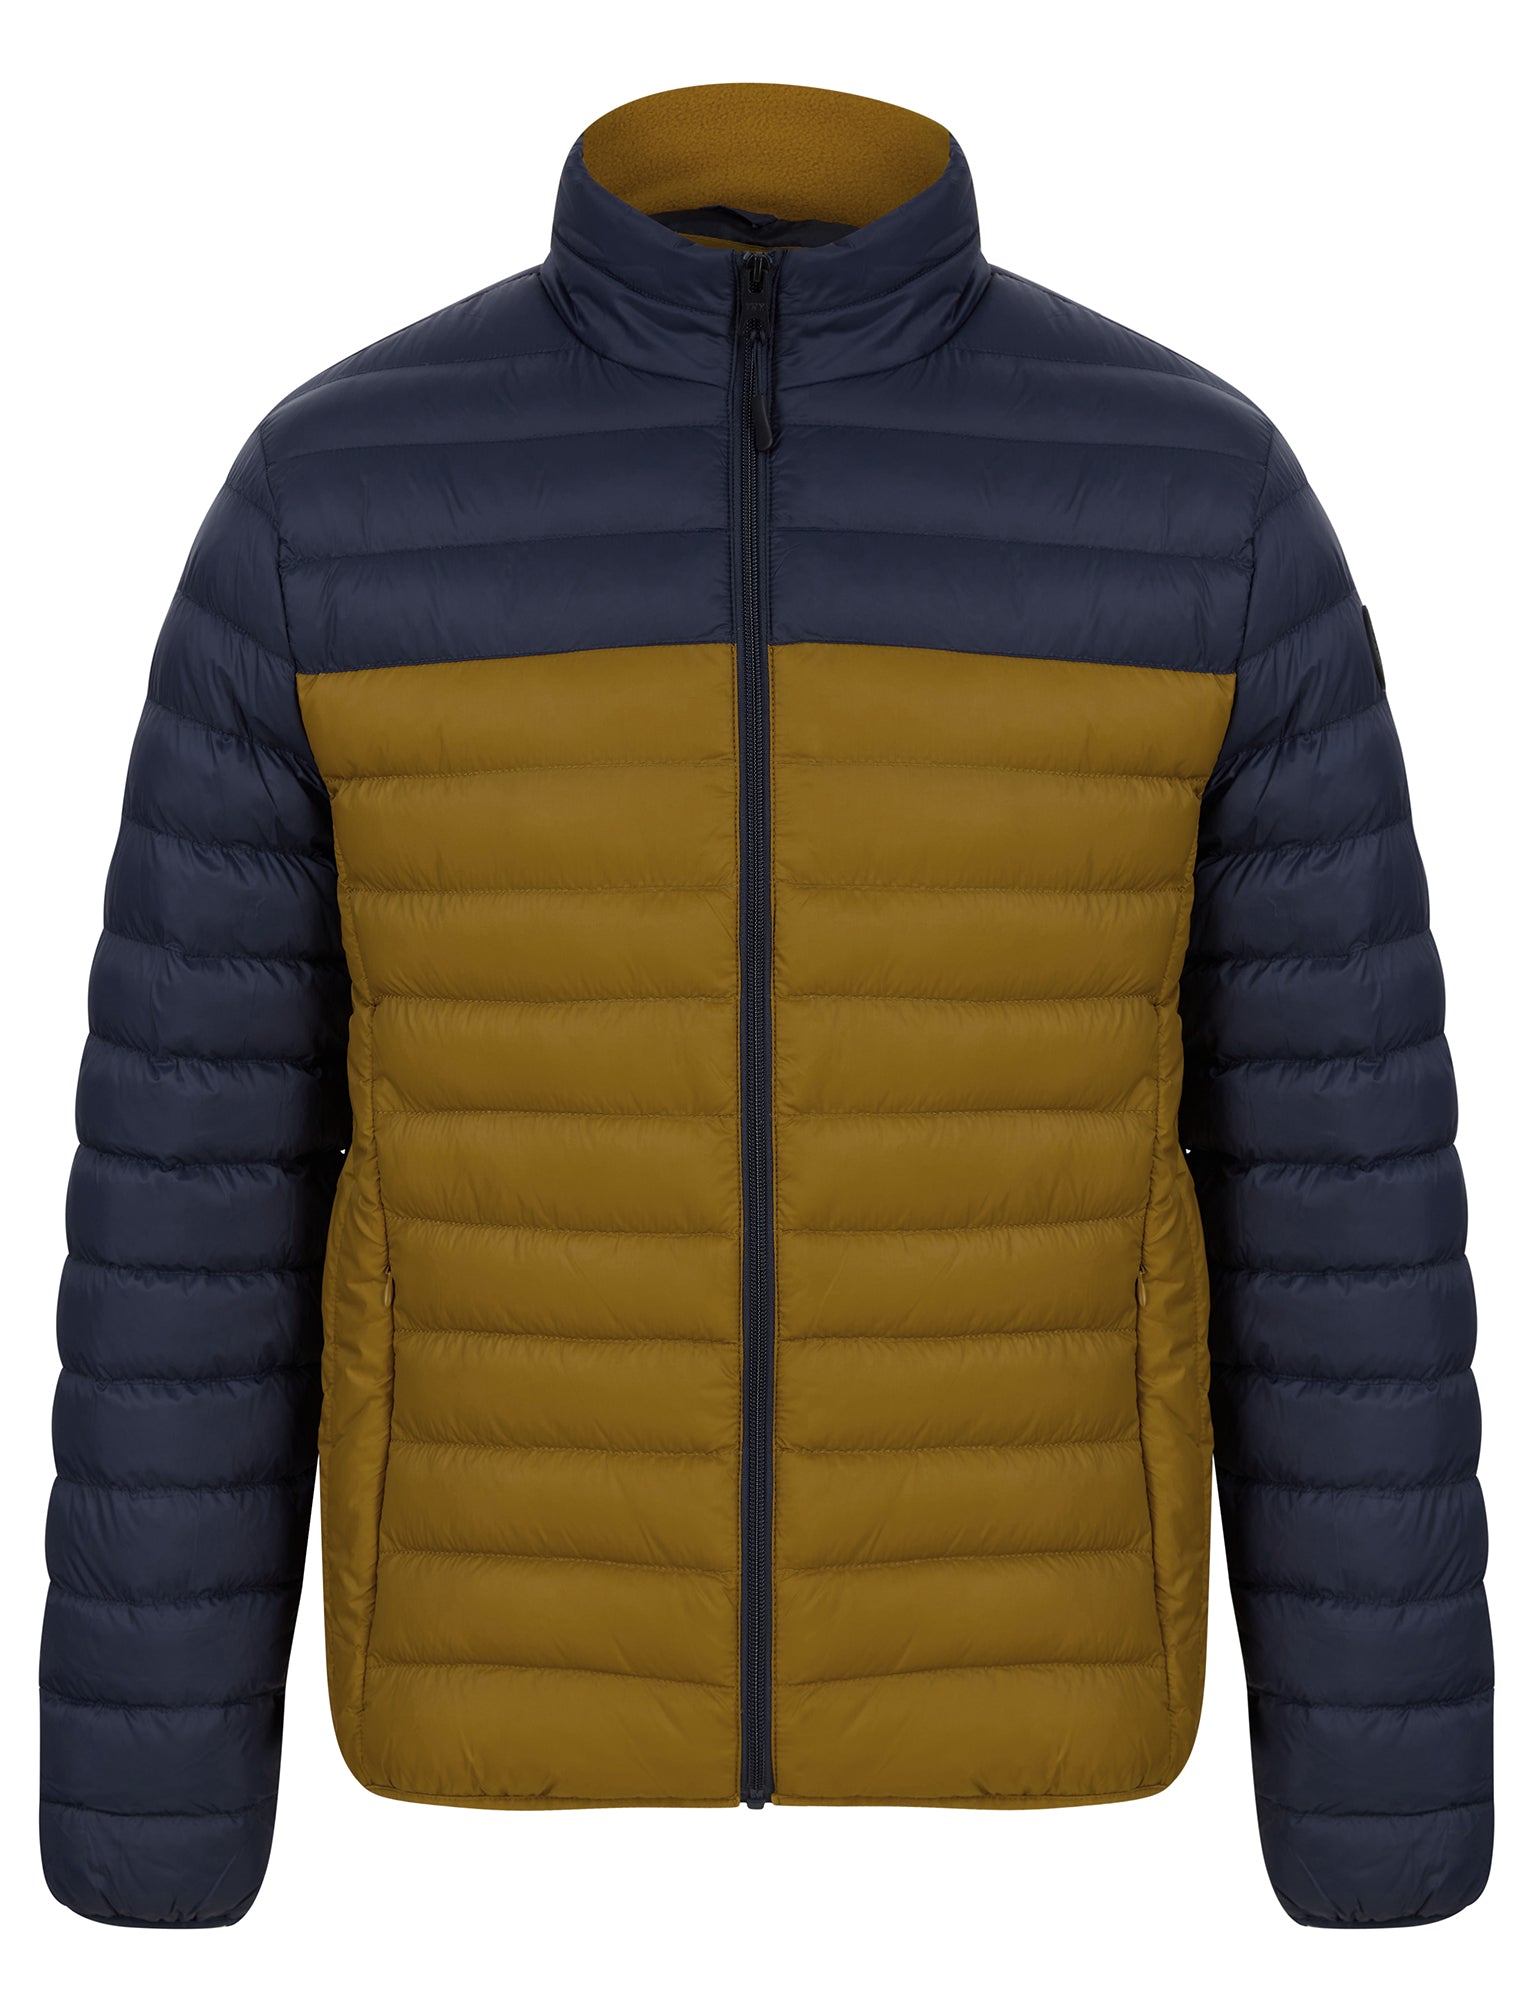 Ichi Lightweight Puffer Jacket - Size UK 10 — One Scoop Store